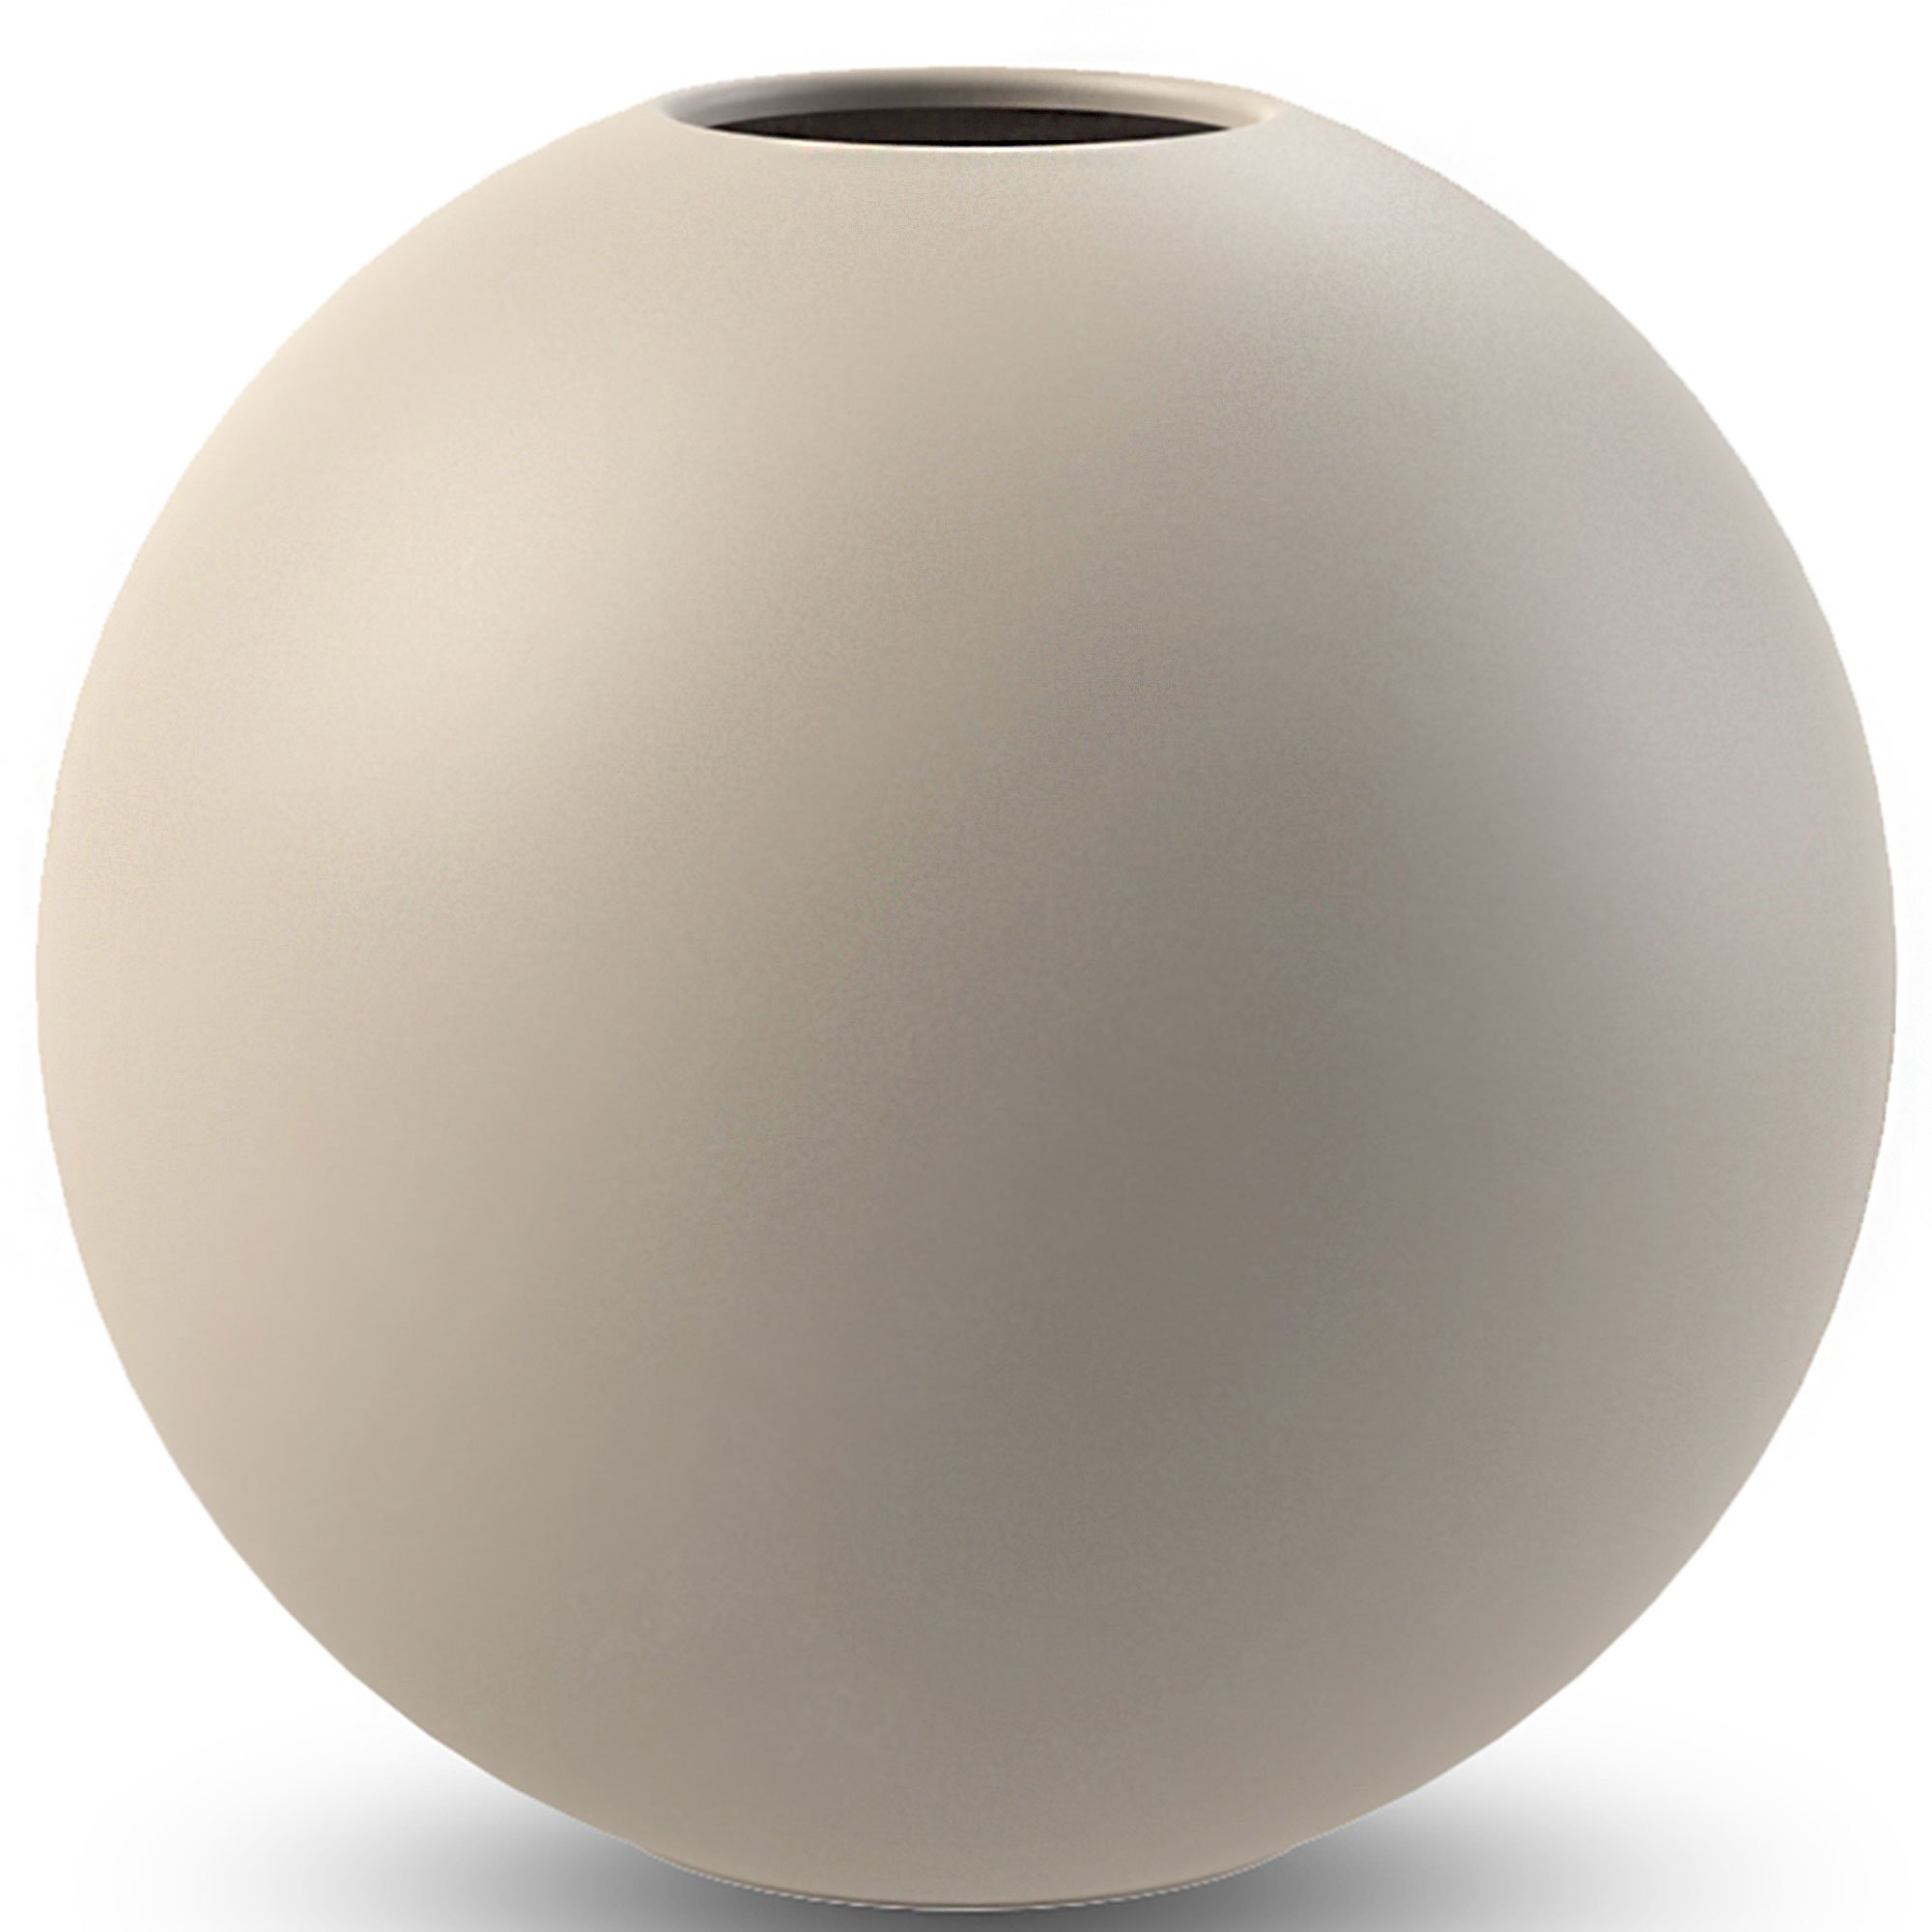 Cooee Design Ball vas 10 cm sand